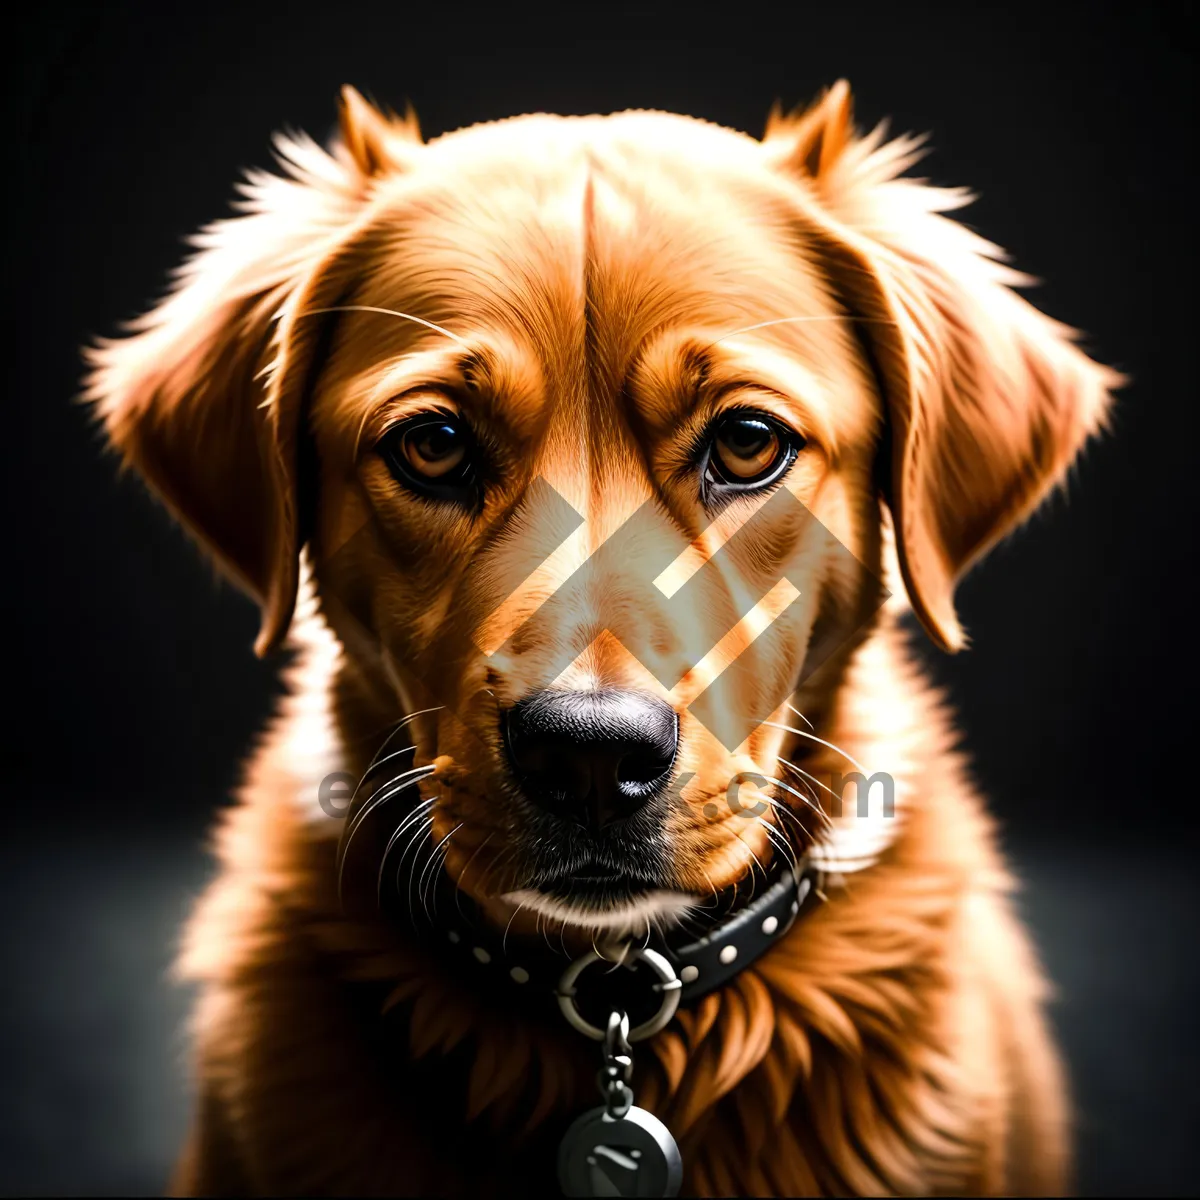 Picture of Golden Retriever Puppy: Adorable Purebred Dog Studio Portrait